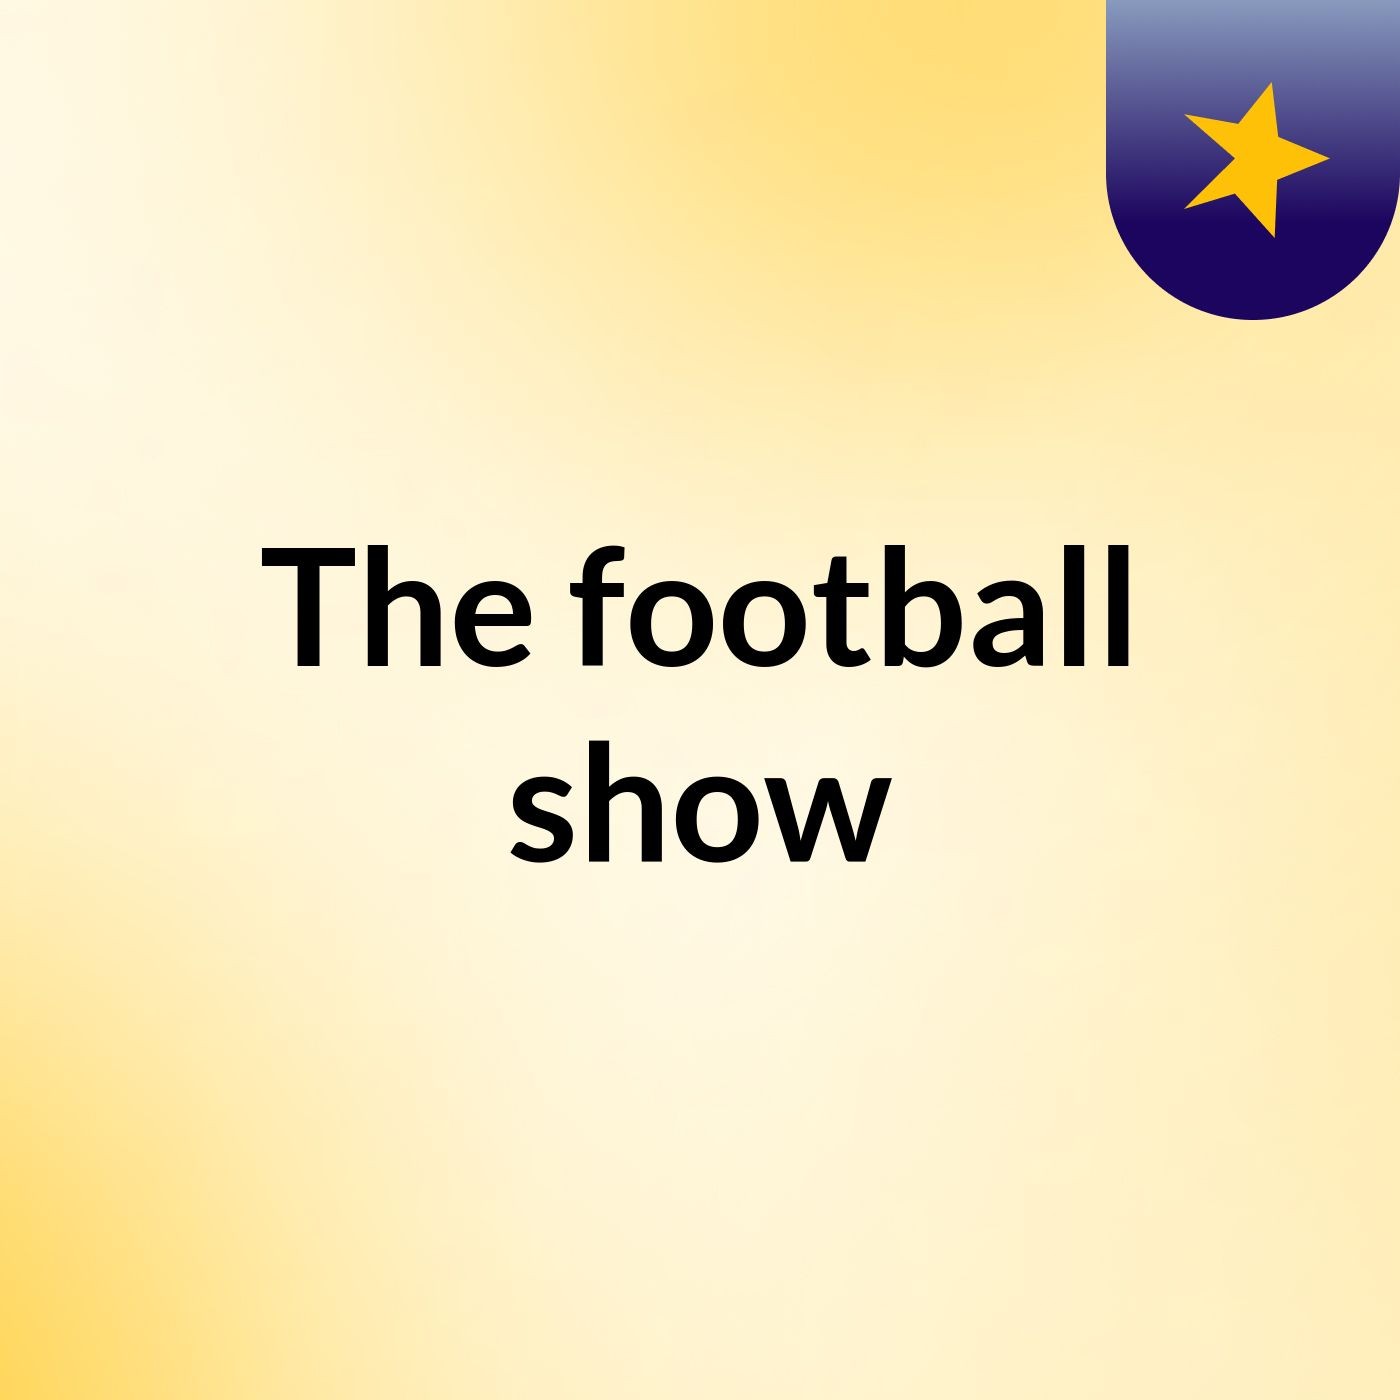 The football show